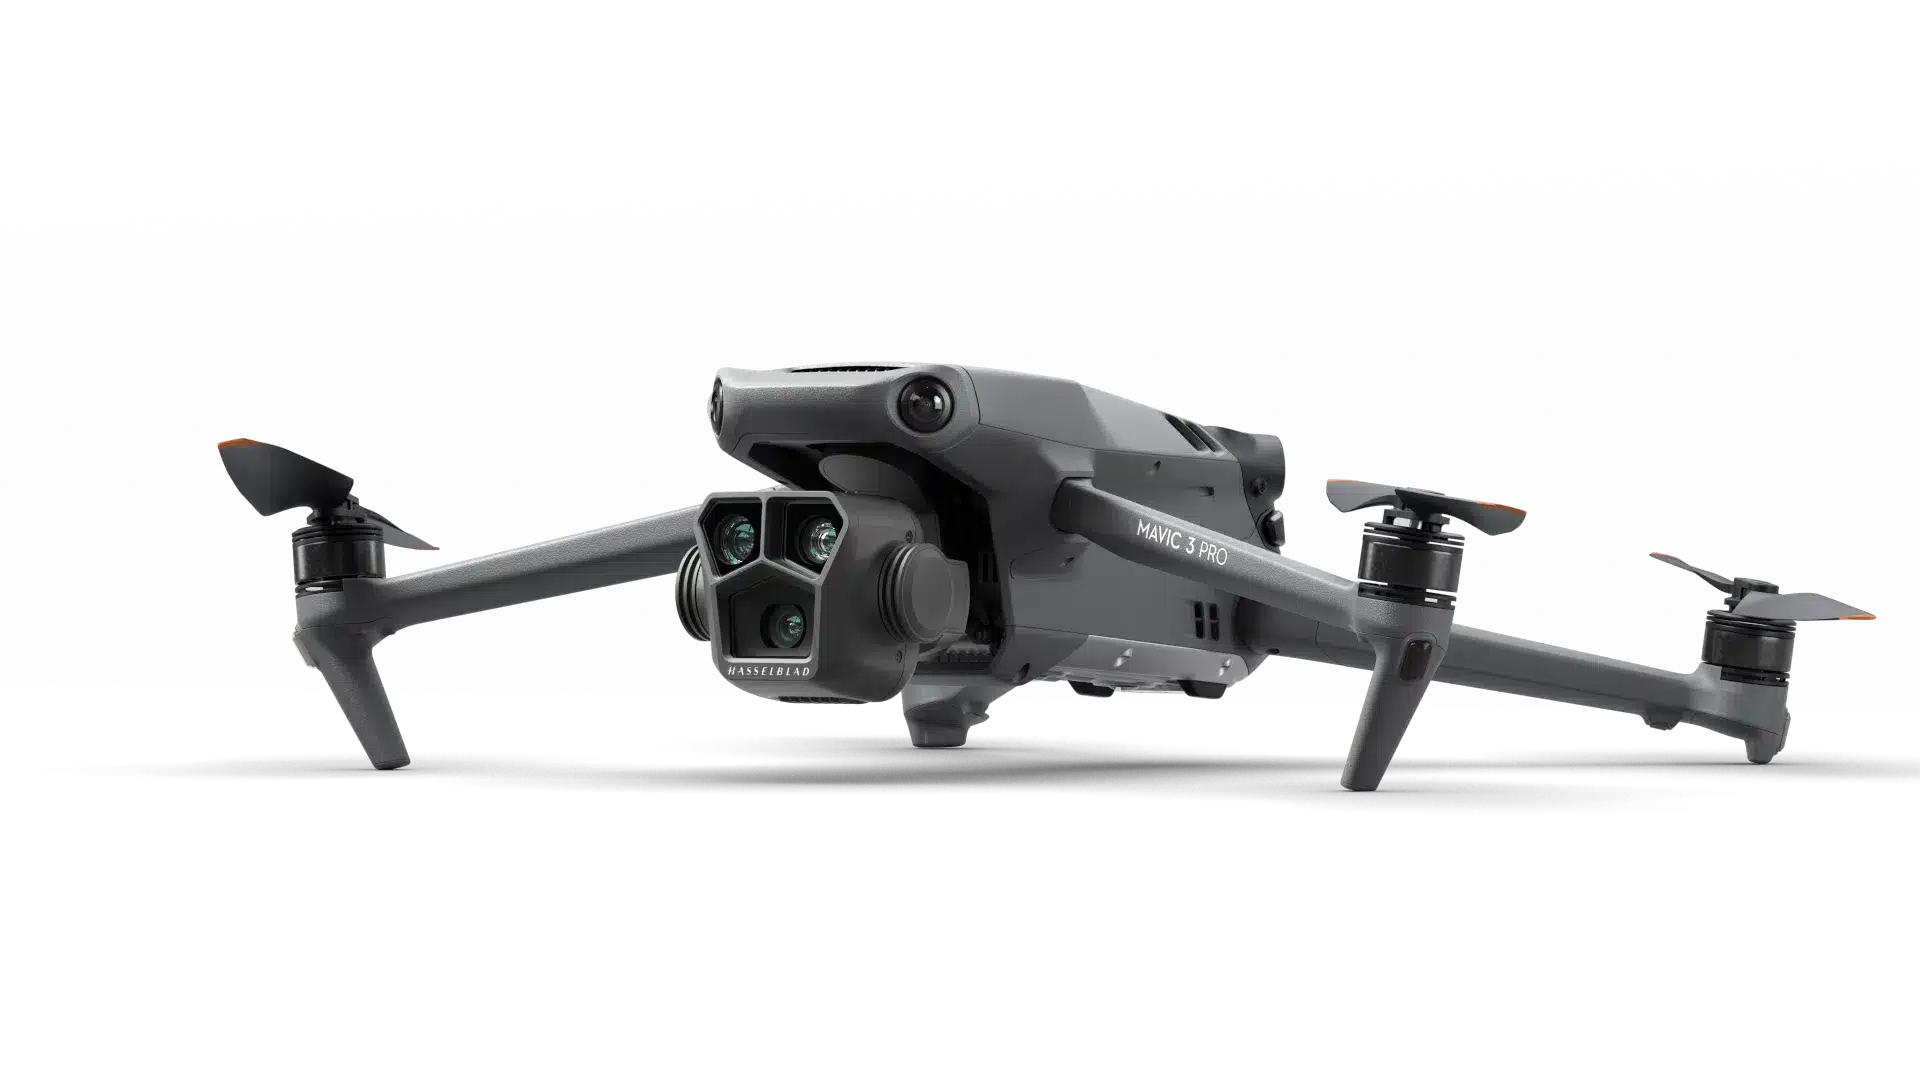 Mavic 3 pro drone homologué C2